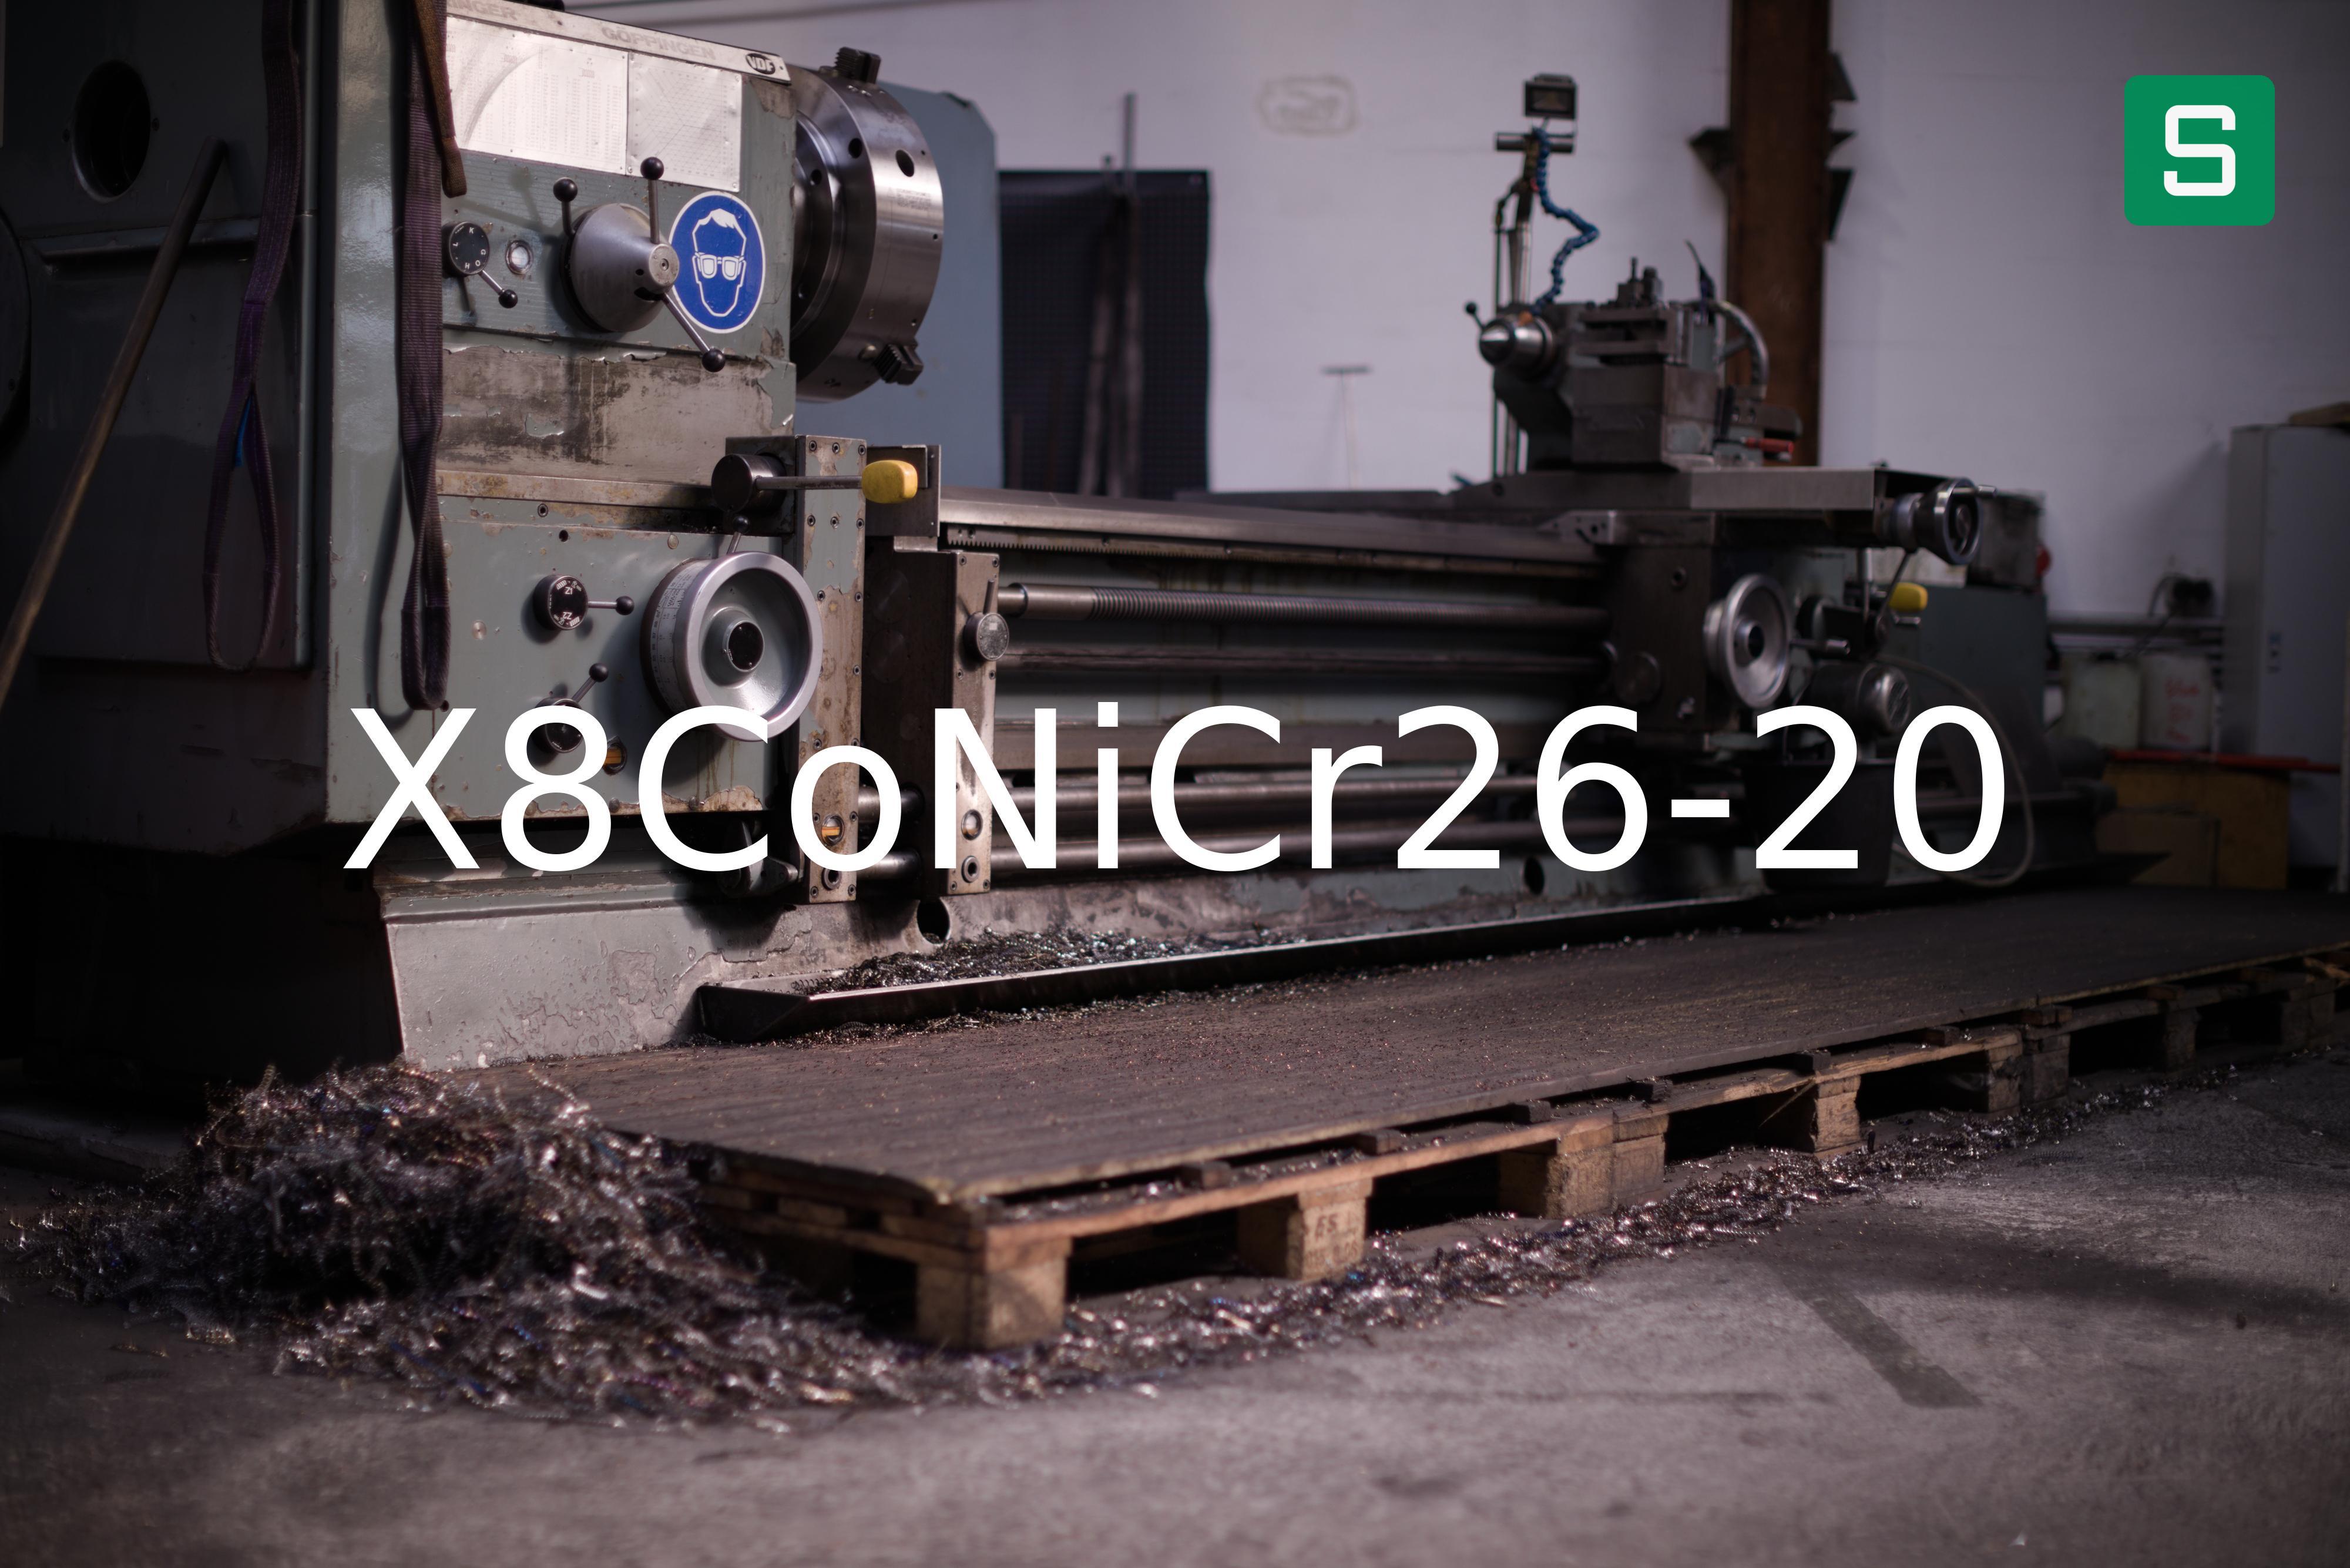 Steel Material: X8CoNiCr26-20